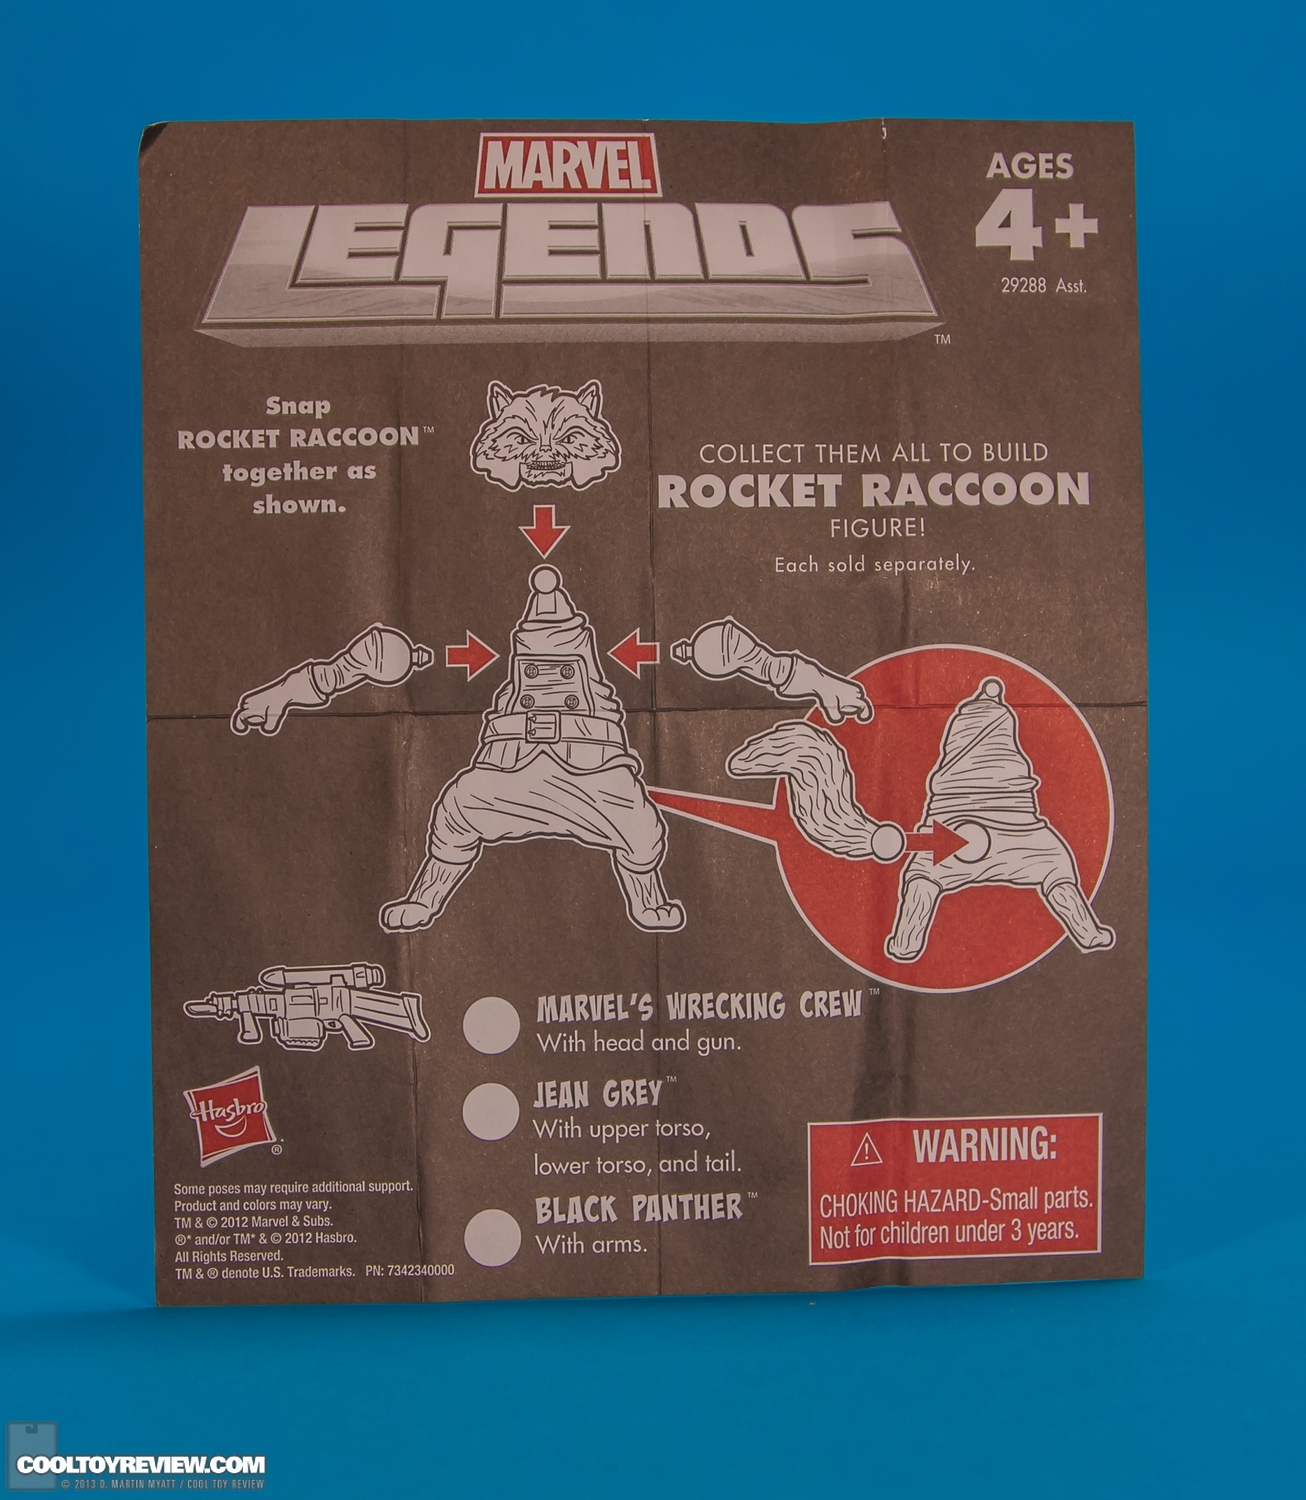 Wrecker-Marvel-Legends-Rocket-Raccoon-Series-Hasbro-011.jpg